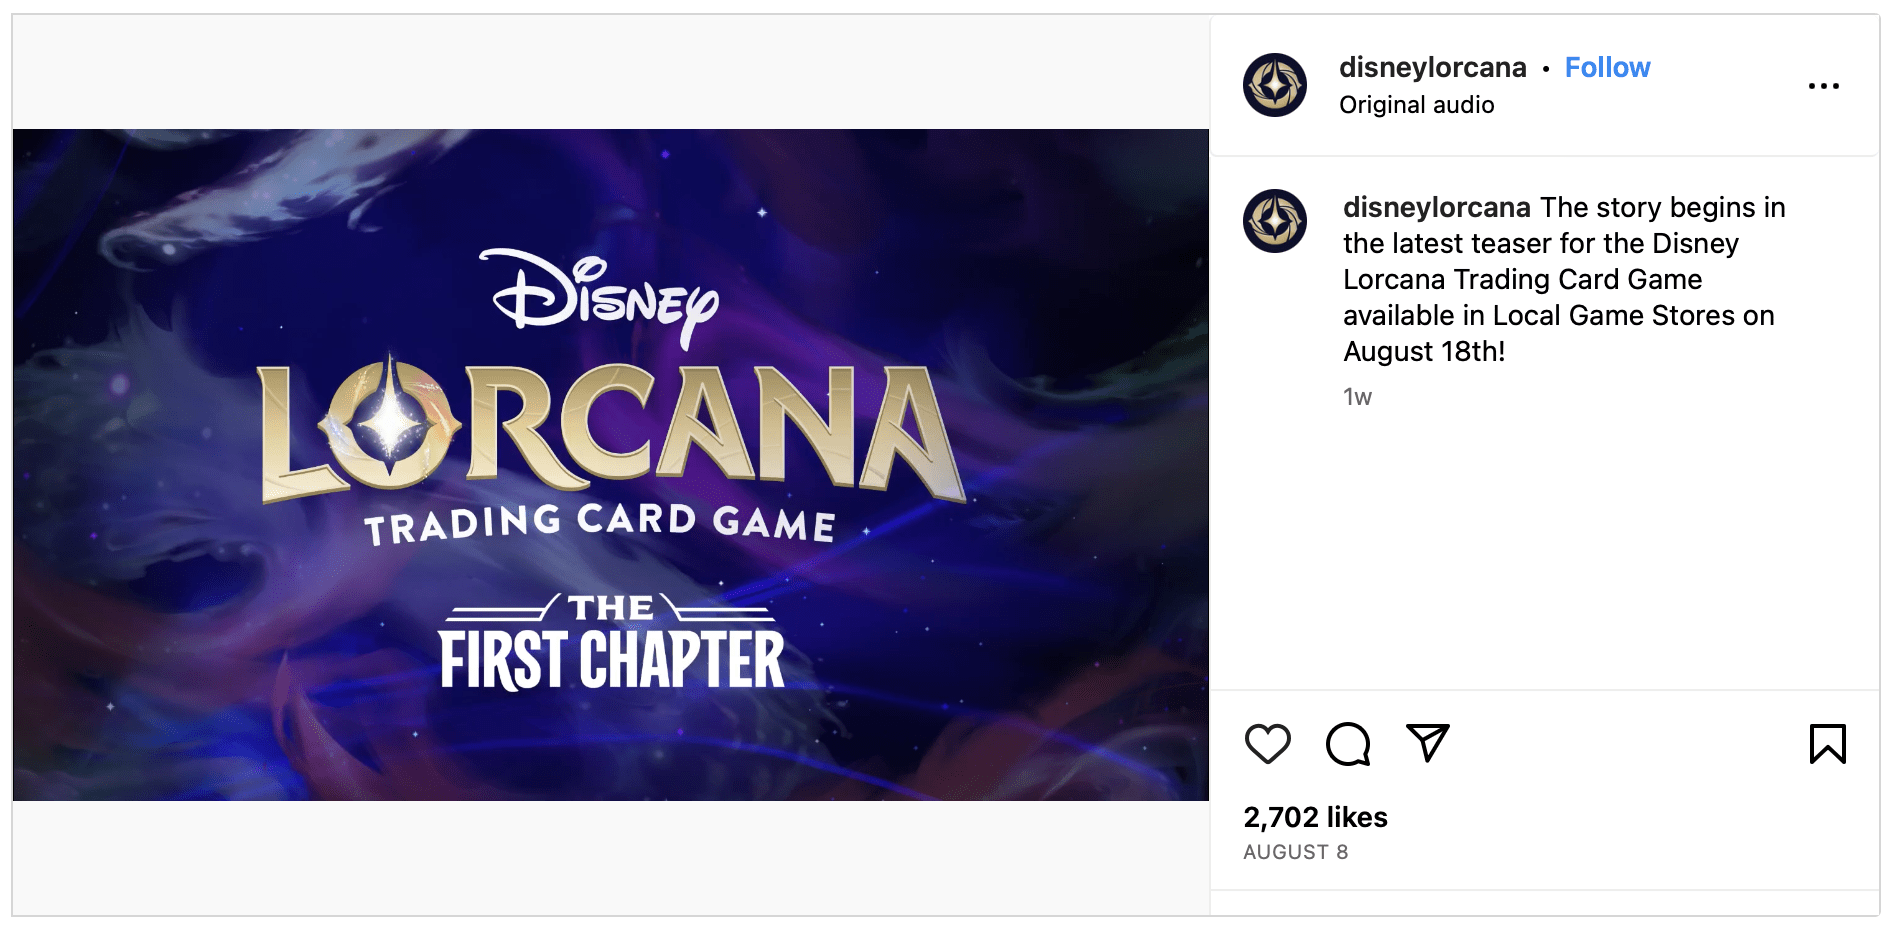 lorcana instagram announcement august 18th lgs release